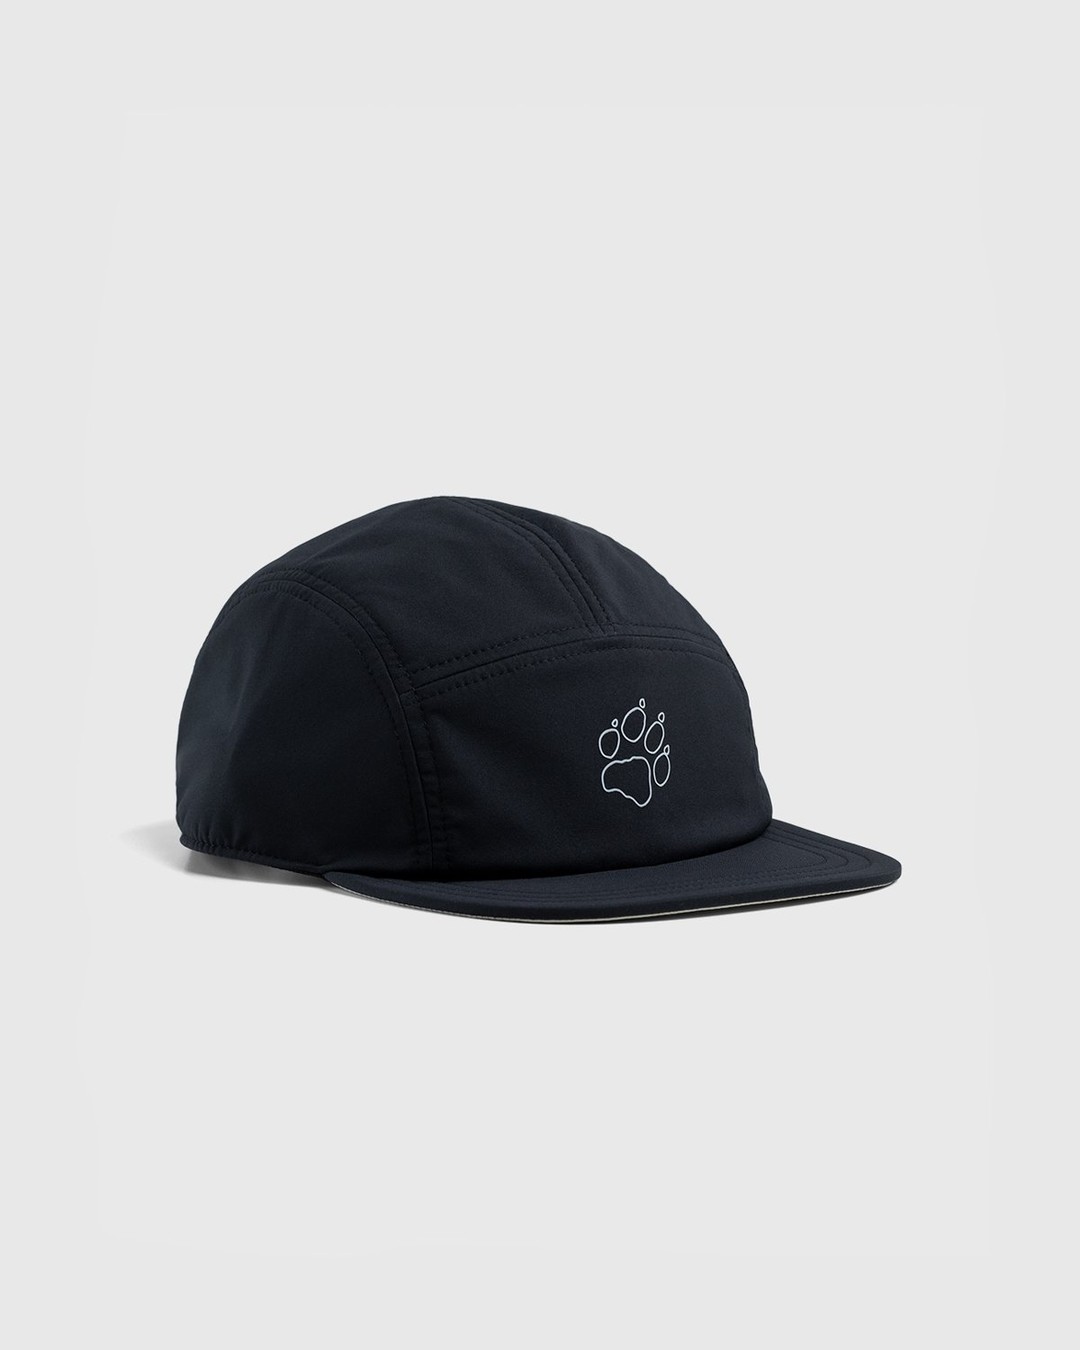 Jack Wolfskin x Highsnobiety – HS Sports 5-Panel Cap Black - Hats - Black - Image 1